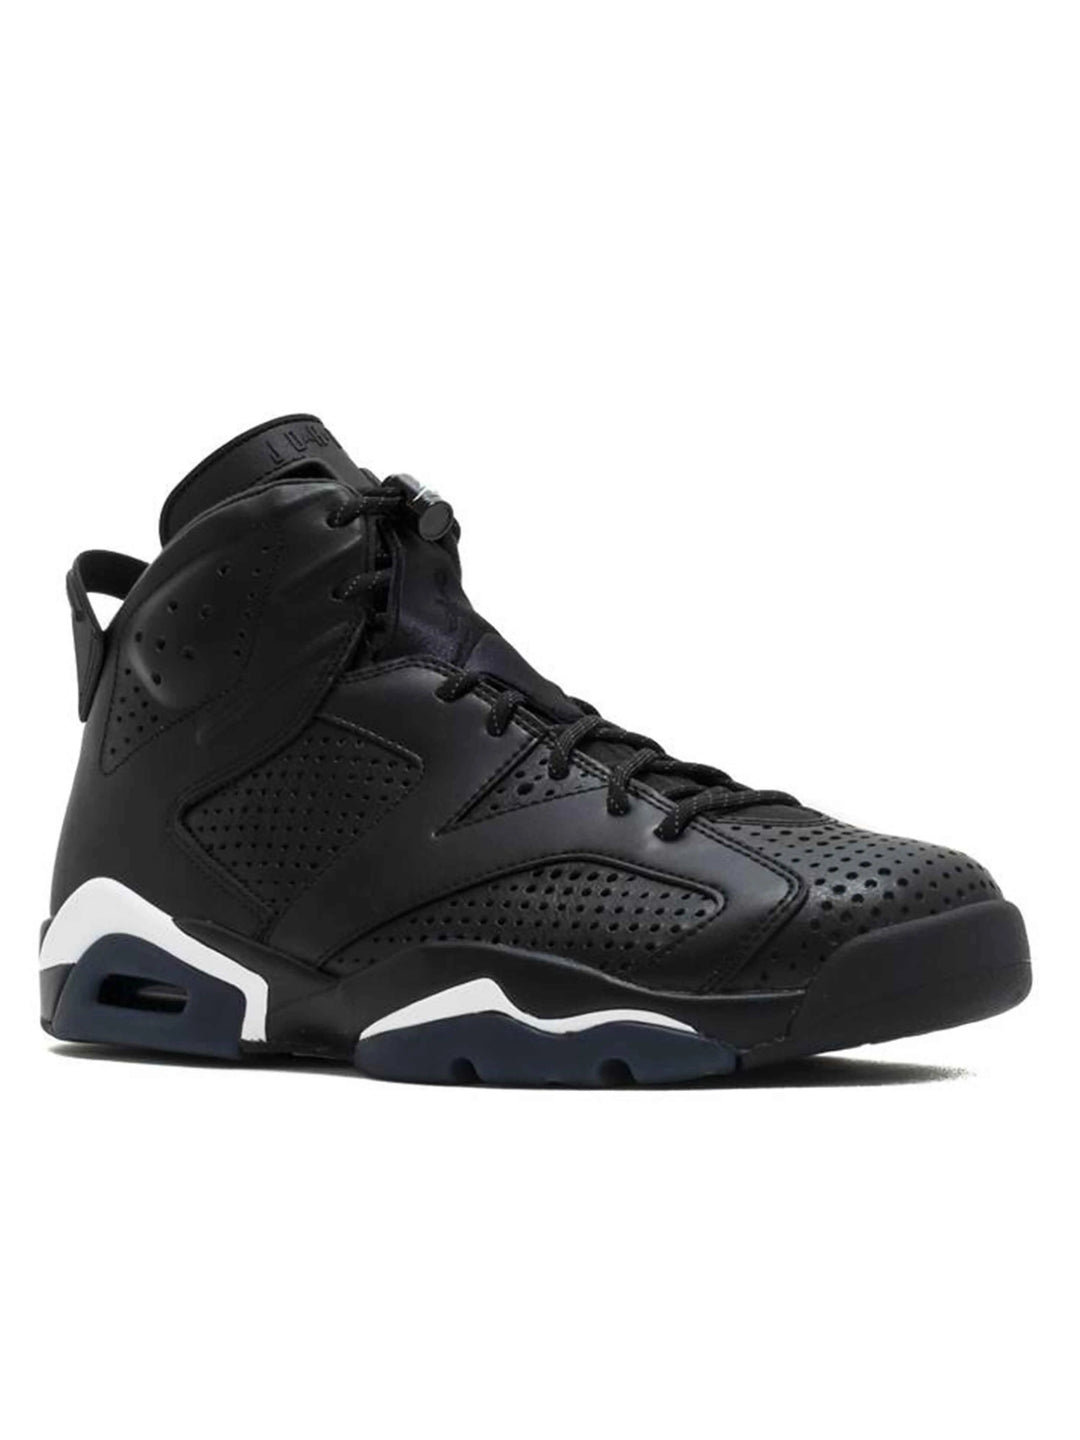 Nike Air Jordan 6 Retro Black Cat Jordan Brand